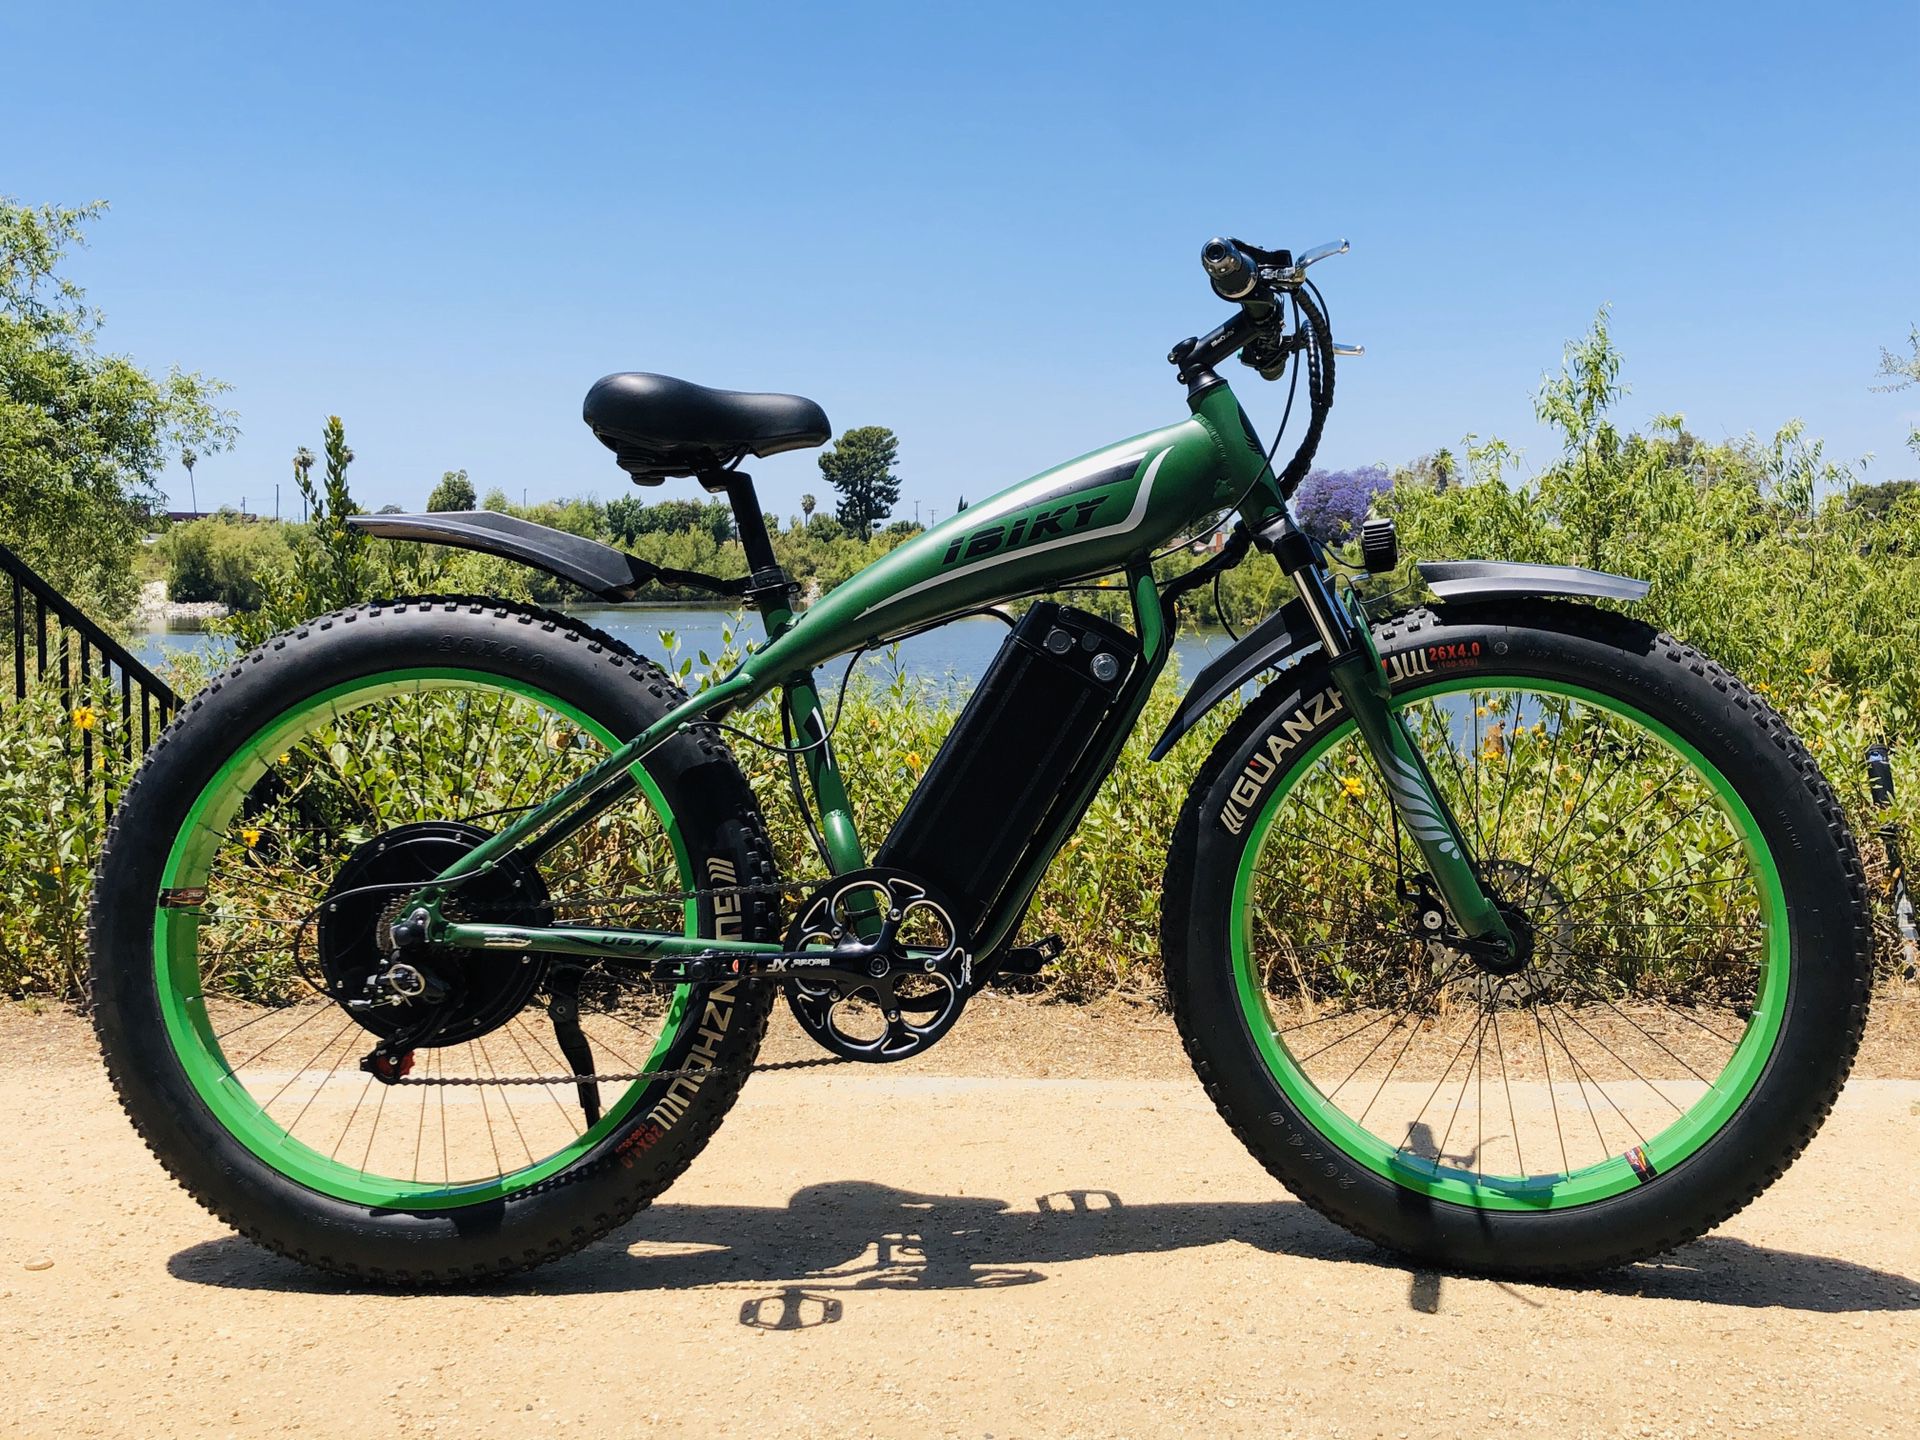 New FAST custom eBike, 2000watt motor 67v lithium battery electric bicycle cruiser mountain bike downhill fat tire matte green military